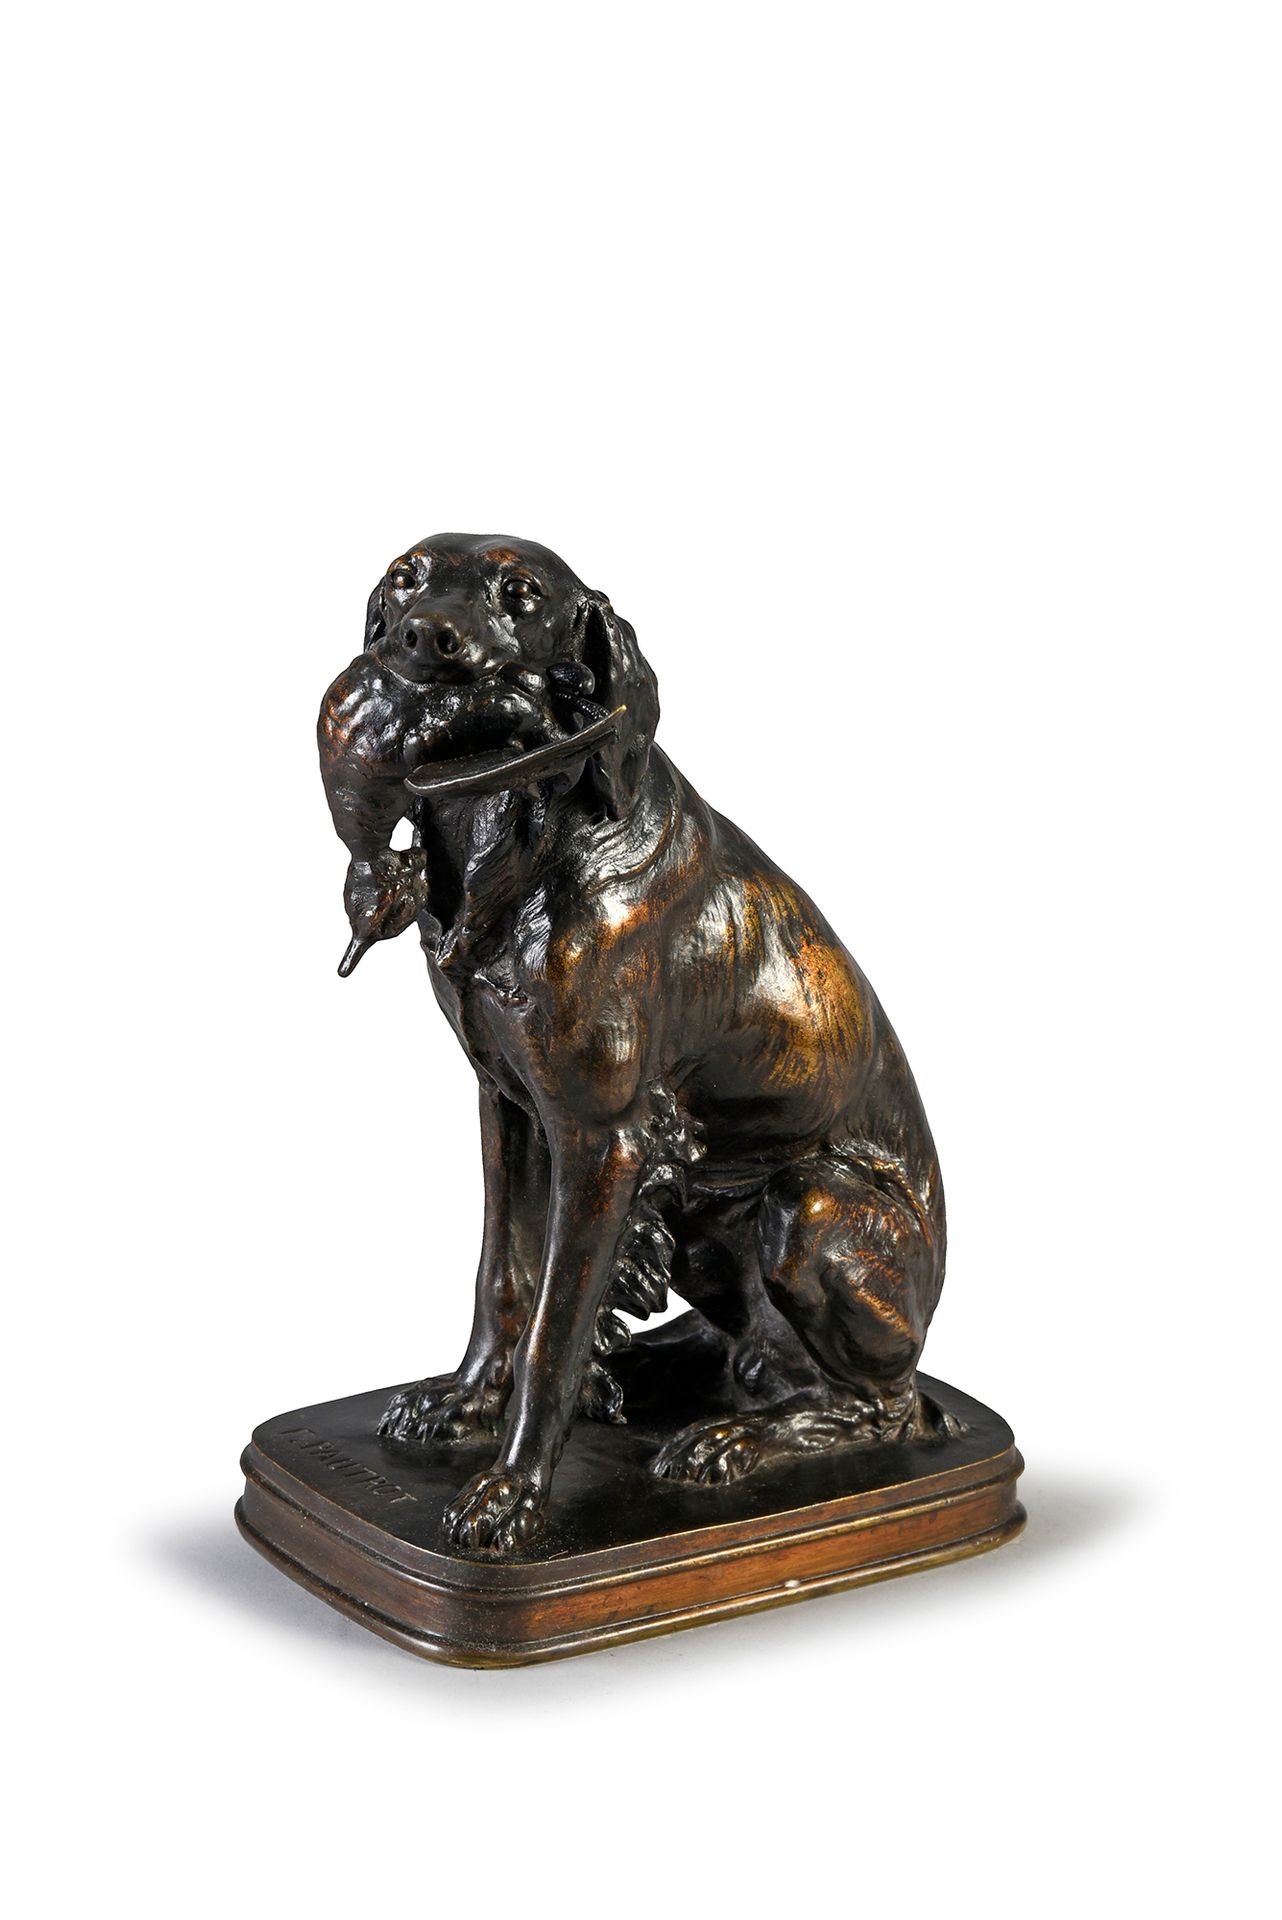 Ferdinand PAUTROT (1832 - 1874) 一只大的坐着的西班牙猎犬，嘴里叼着一只茶叶。
青铜器上有美丽的棕色铜锈，底部有 "admis a&hellip;